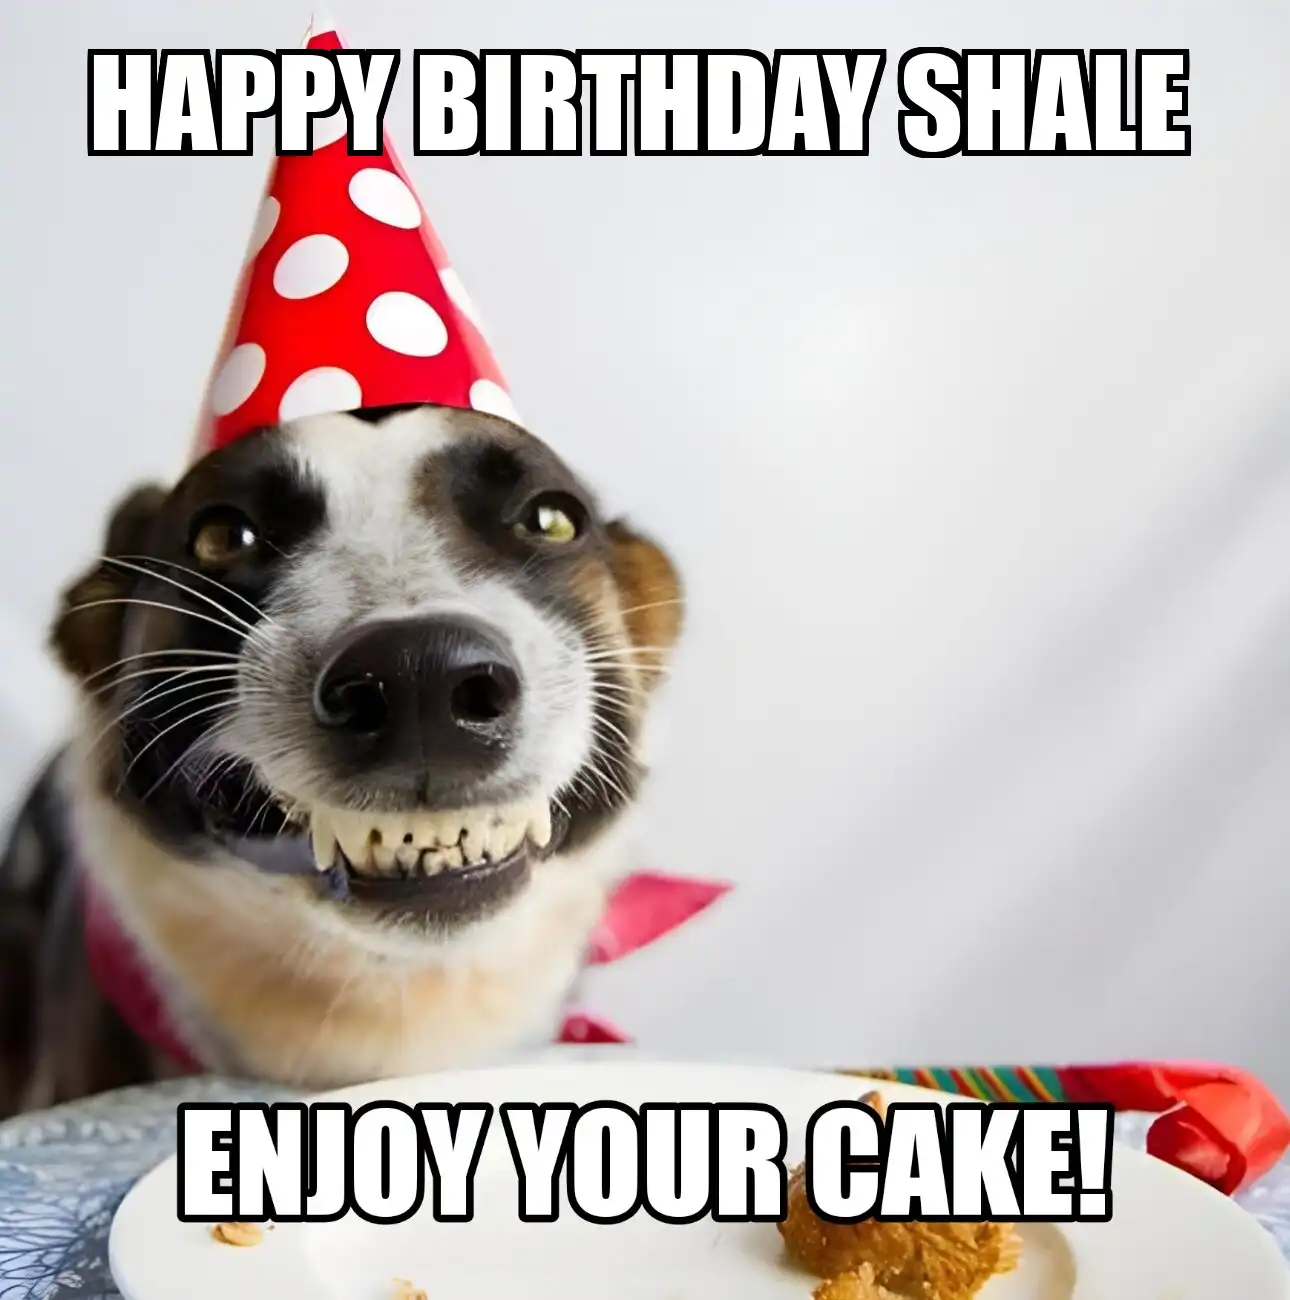 Happy Birthday Shale Enjoy Your Cake Dog Meme